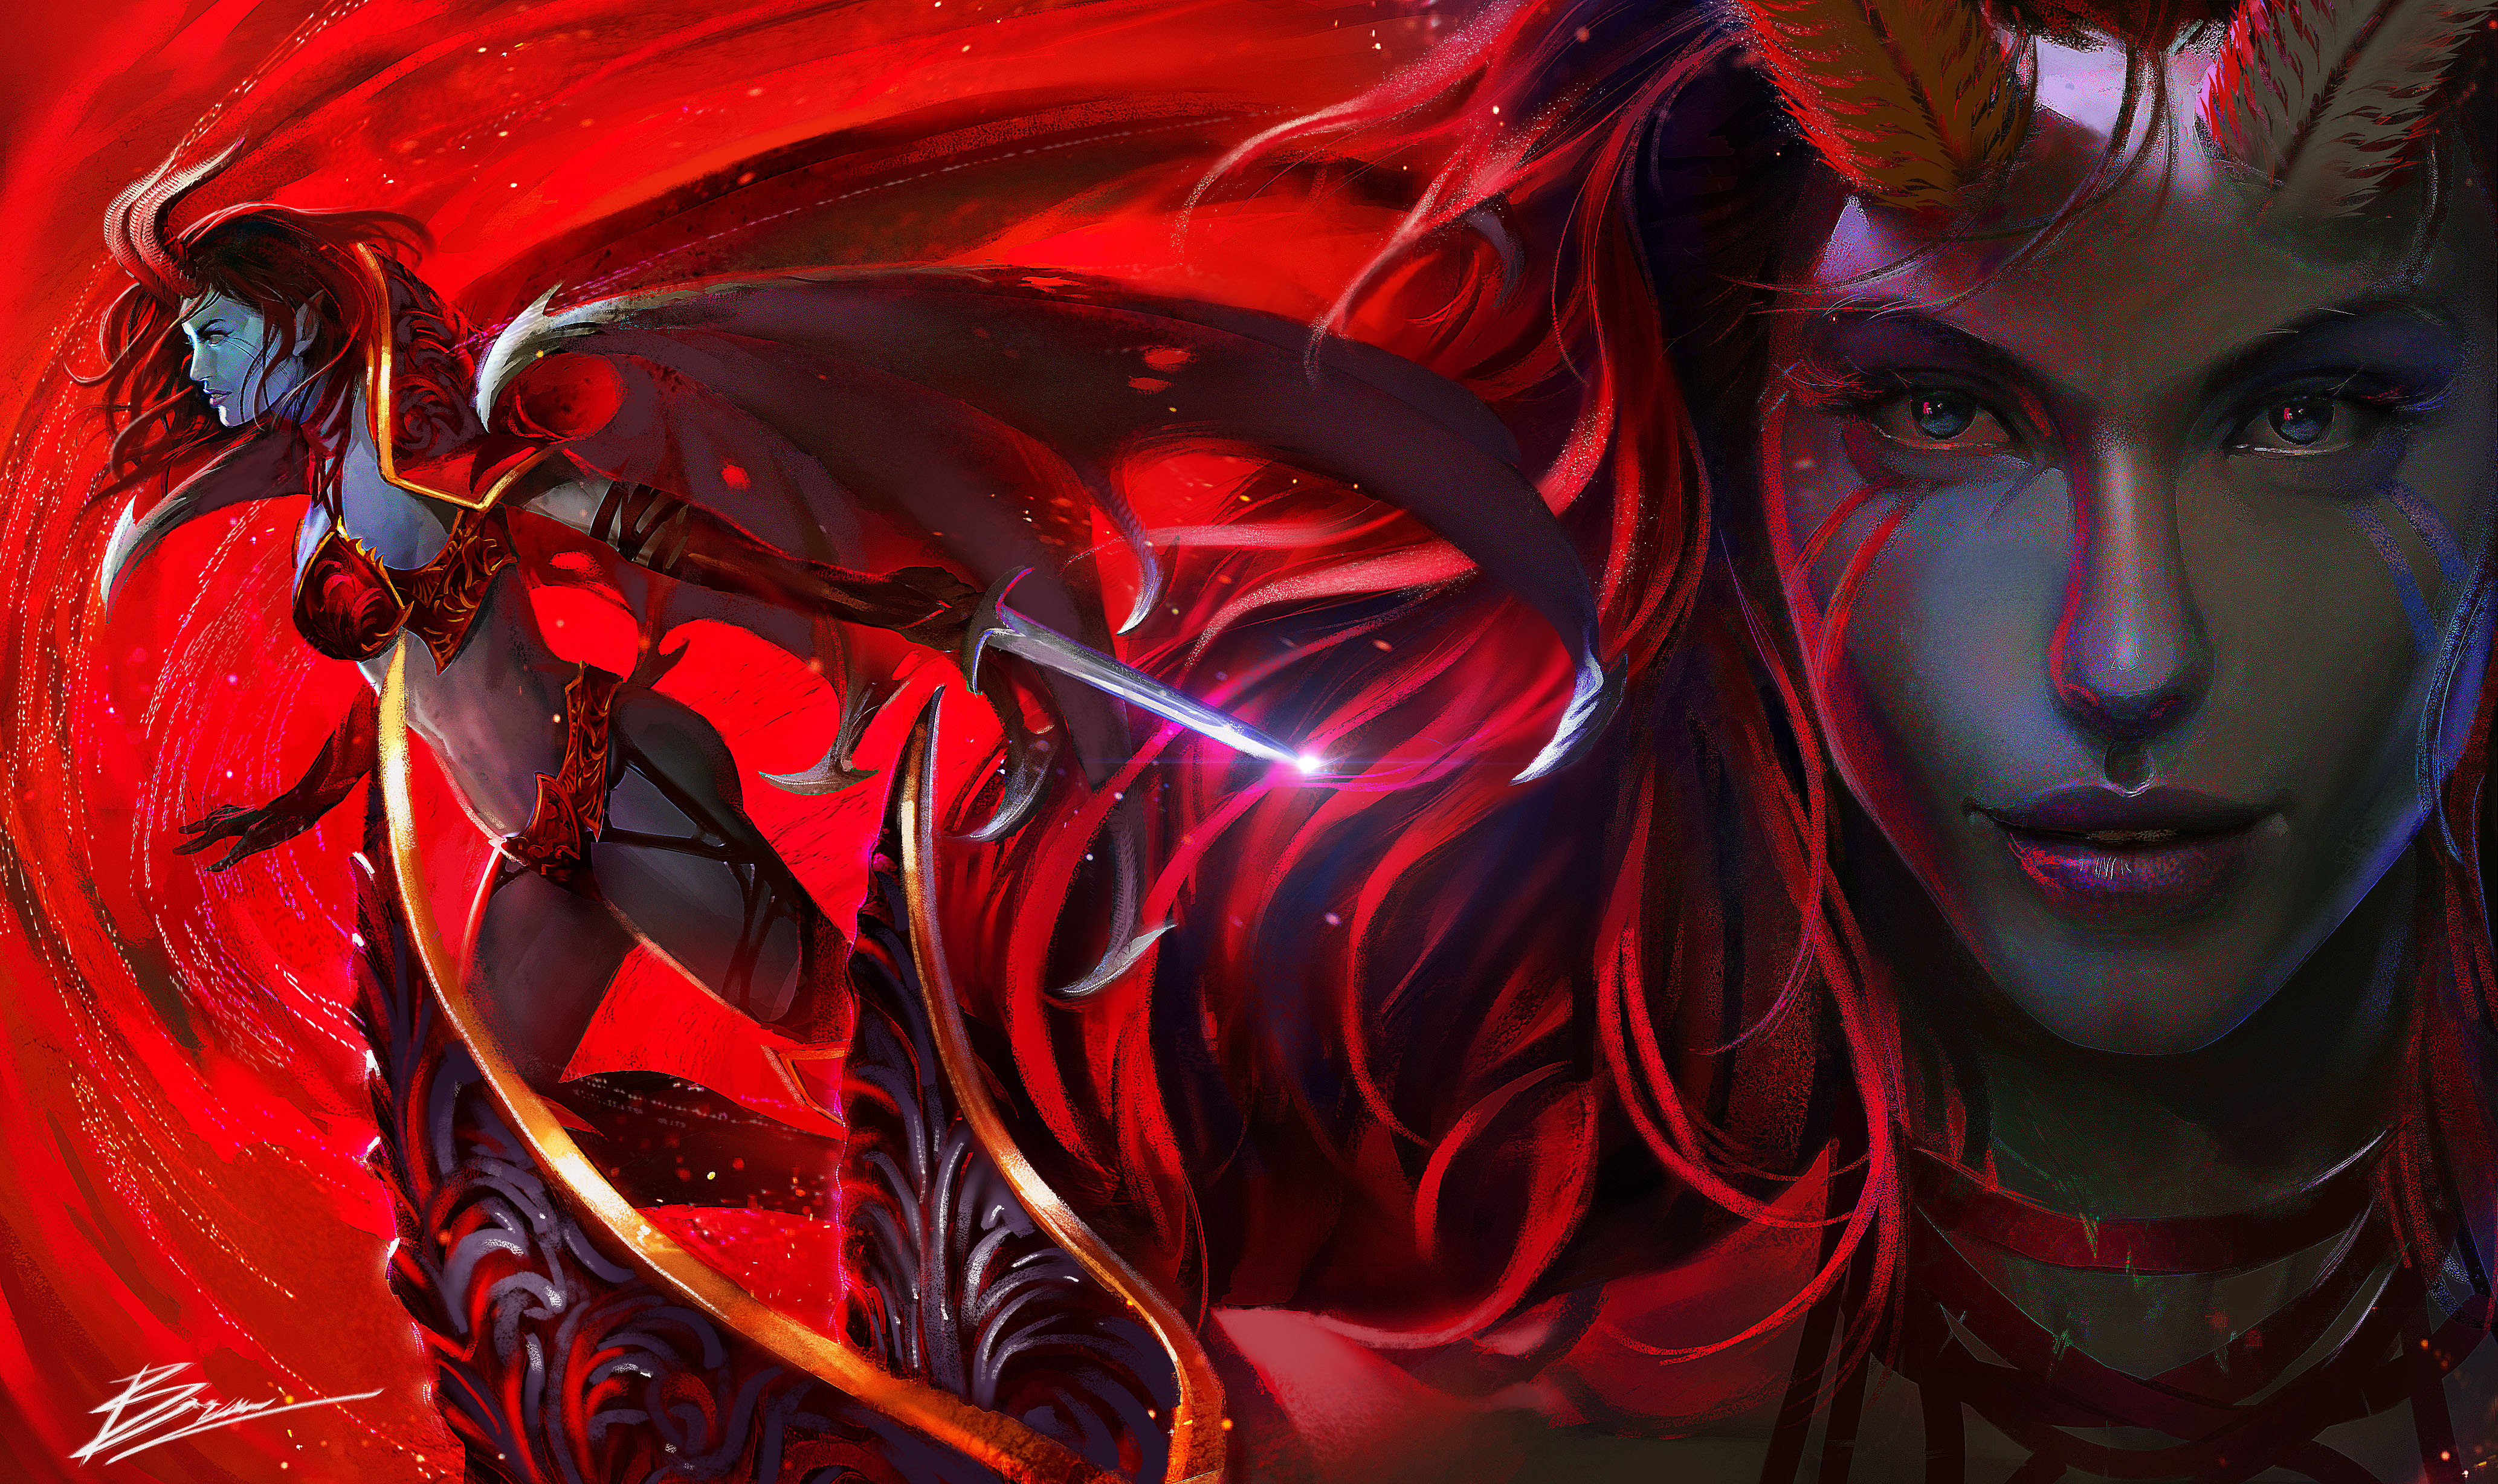 queen of pain (dota 2), red, video game, dota 2, fantasy, horns, woman warrior, dota